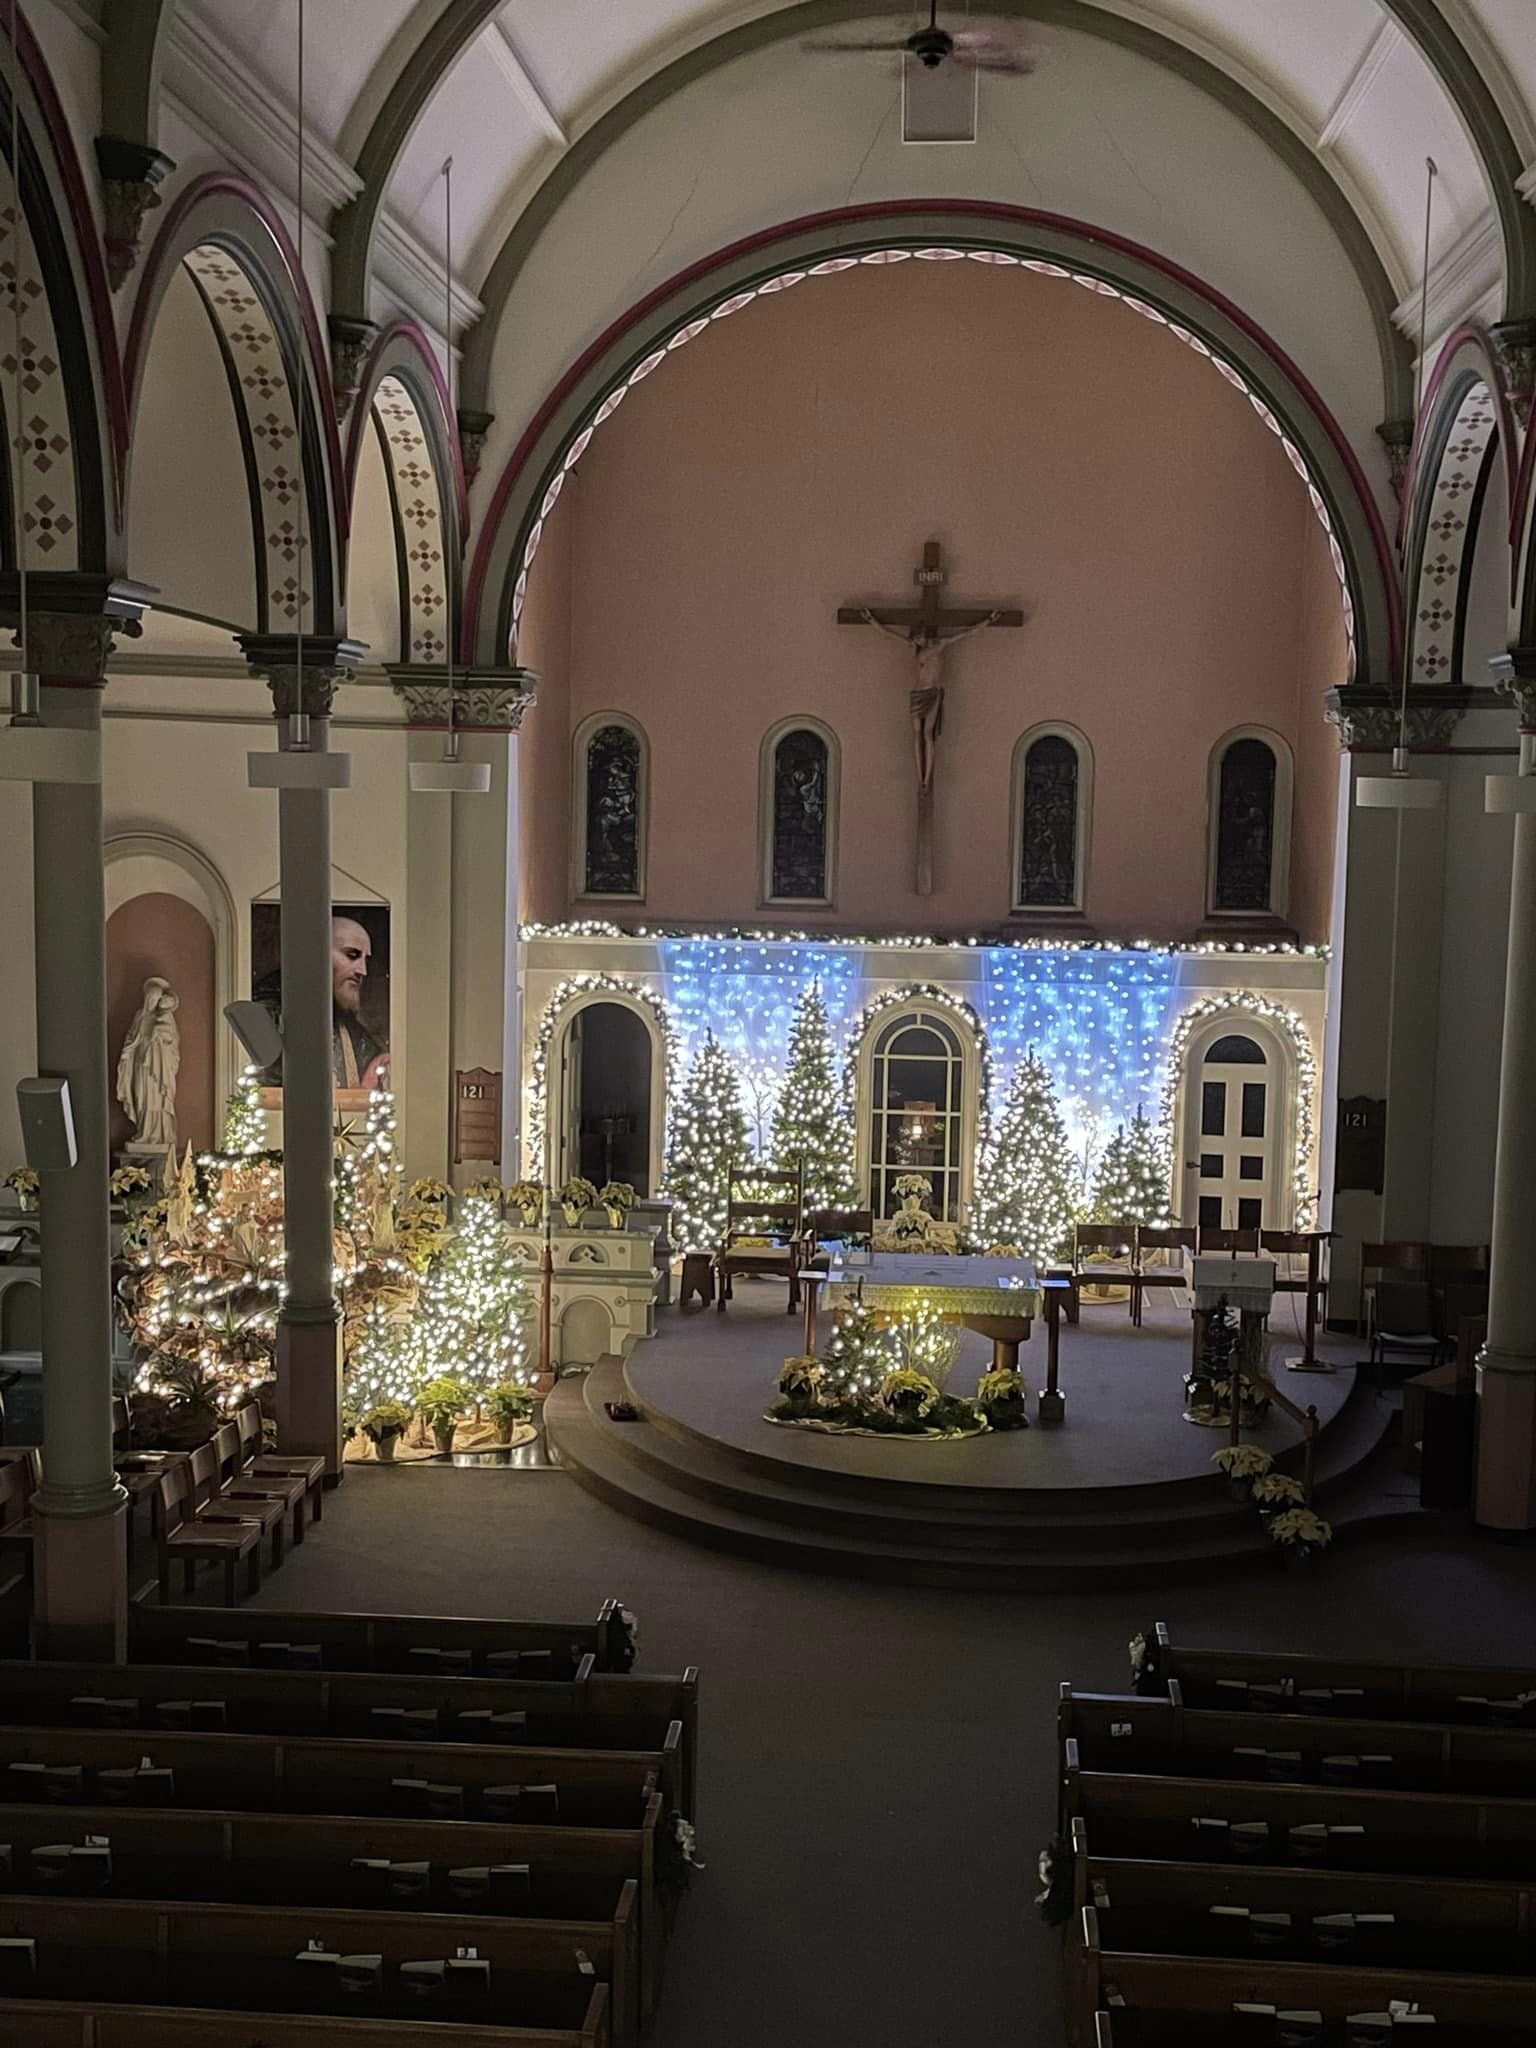  Holy Family Parish, Adrian, MI Christmas display  